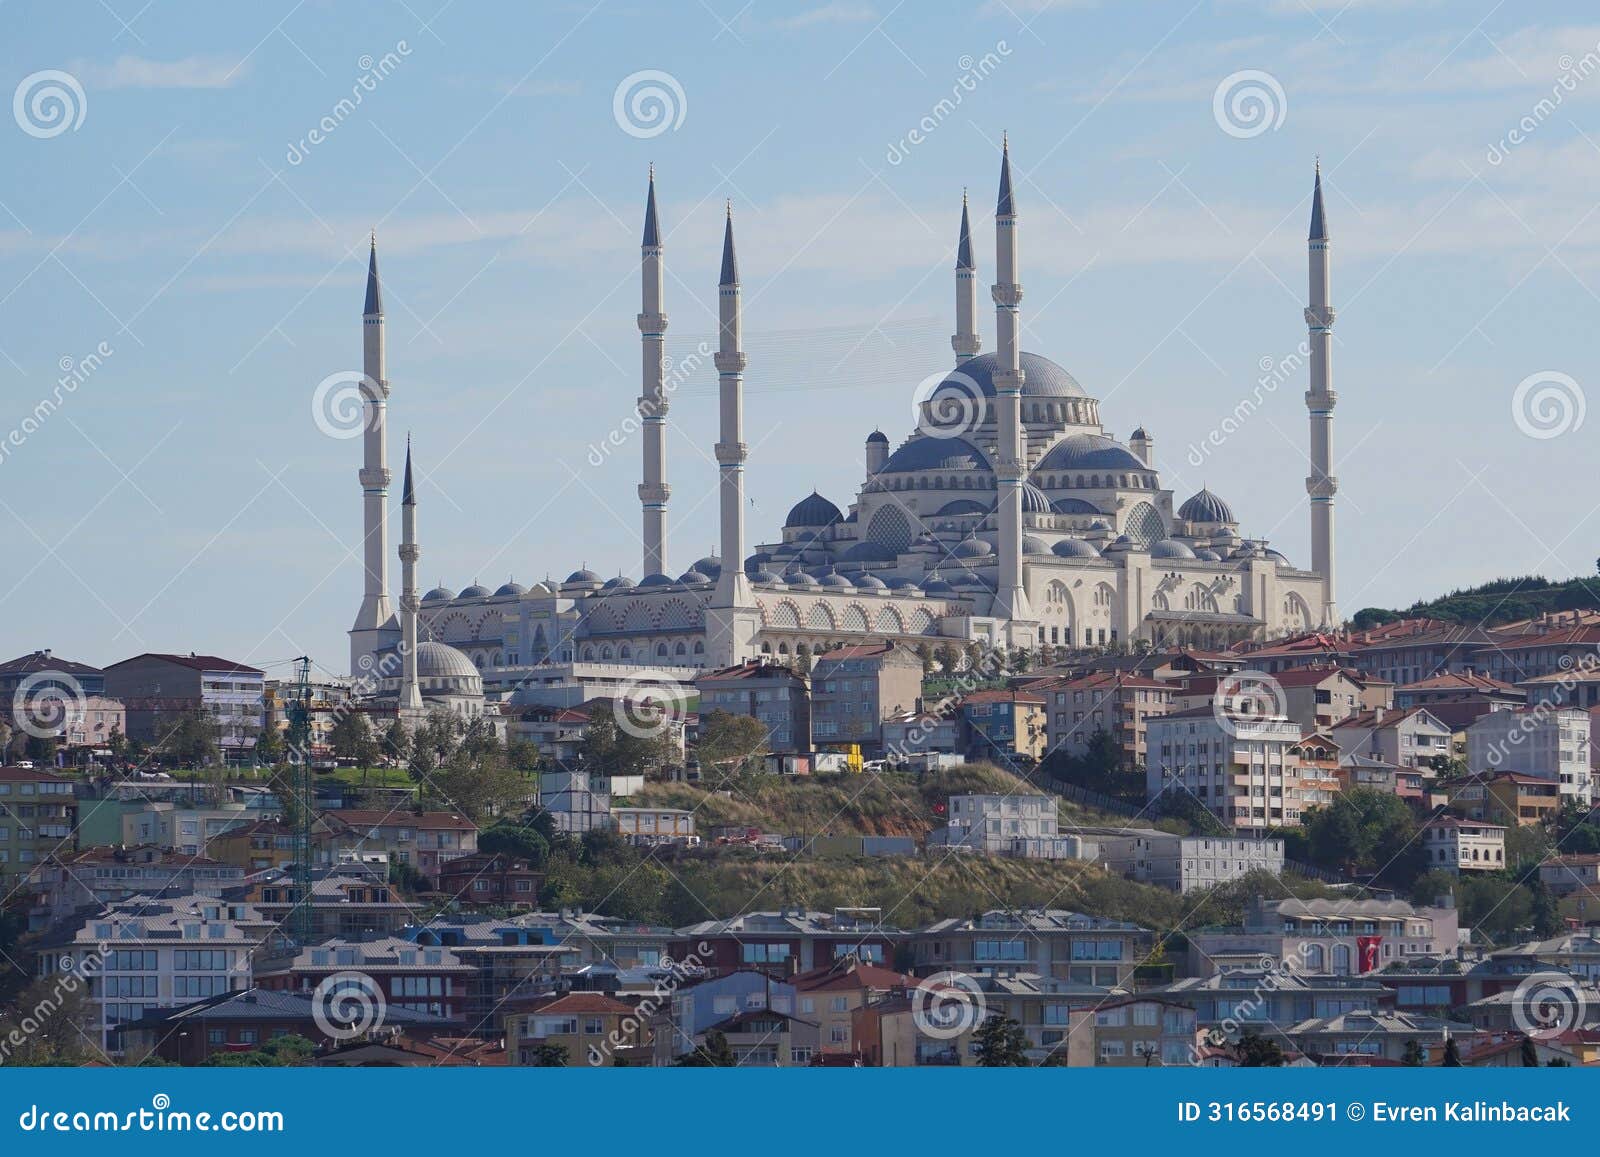 camlica mosque in istanbul, turkiye